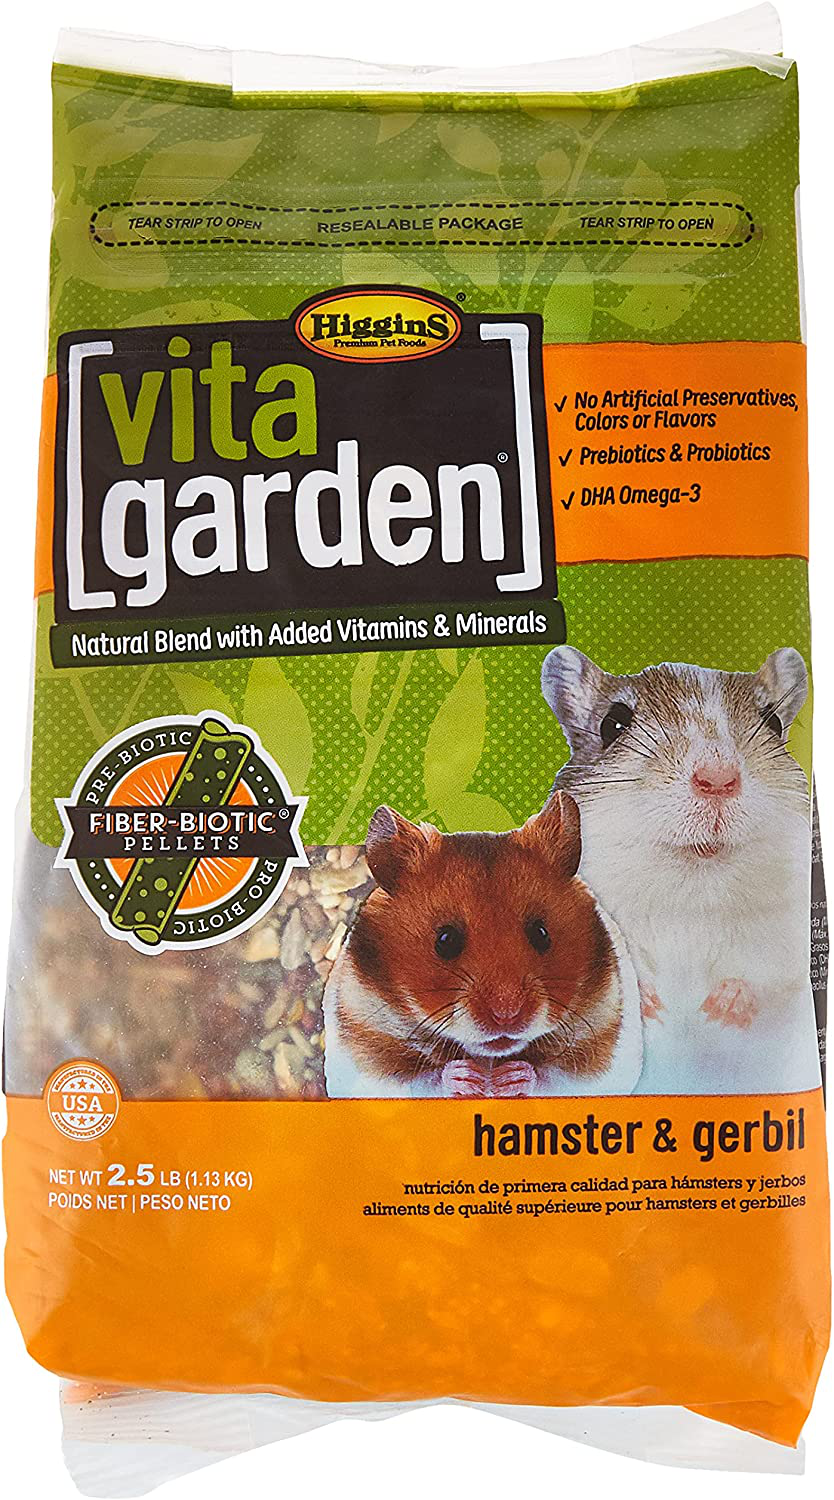 Higgins Vita Garden Hamster & Gerbil Food